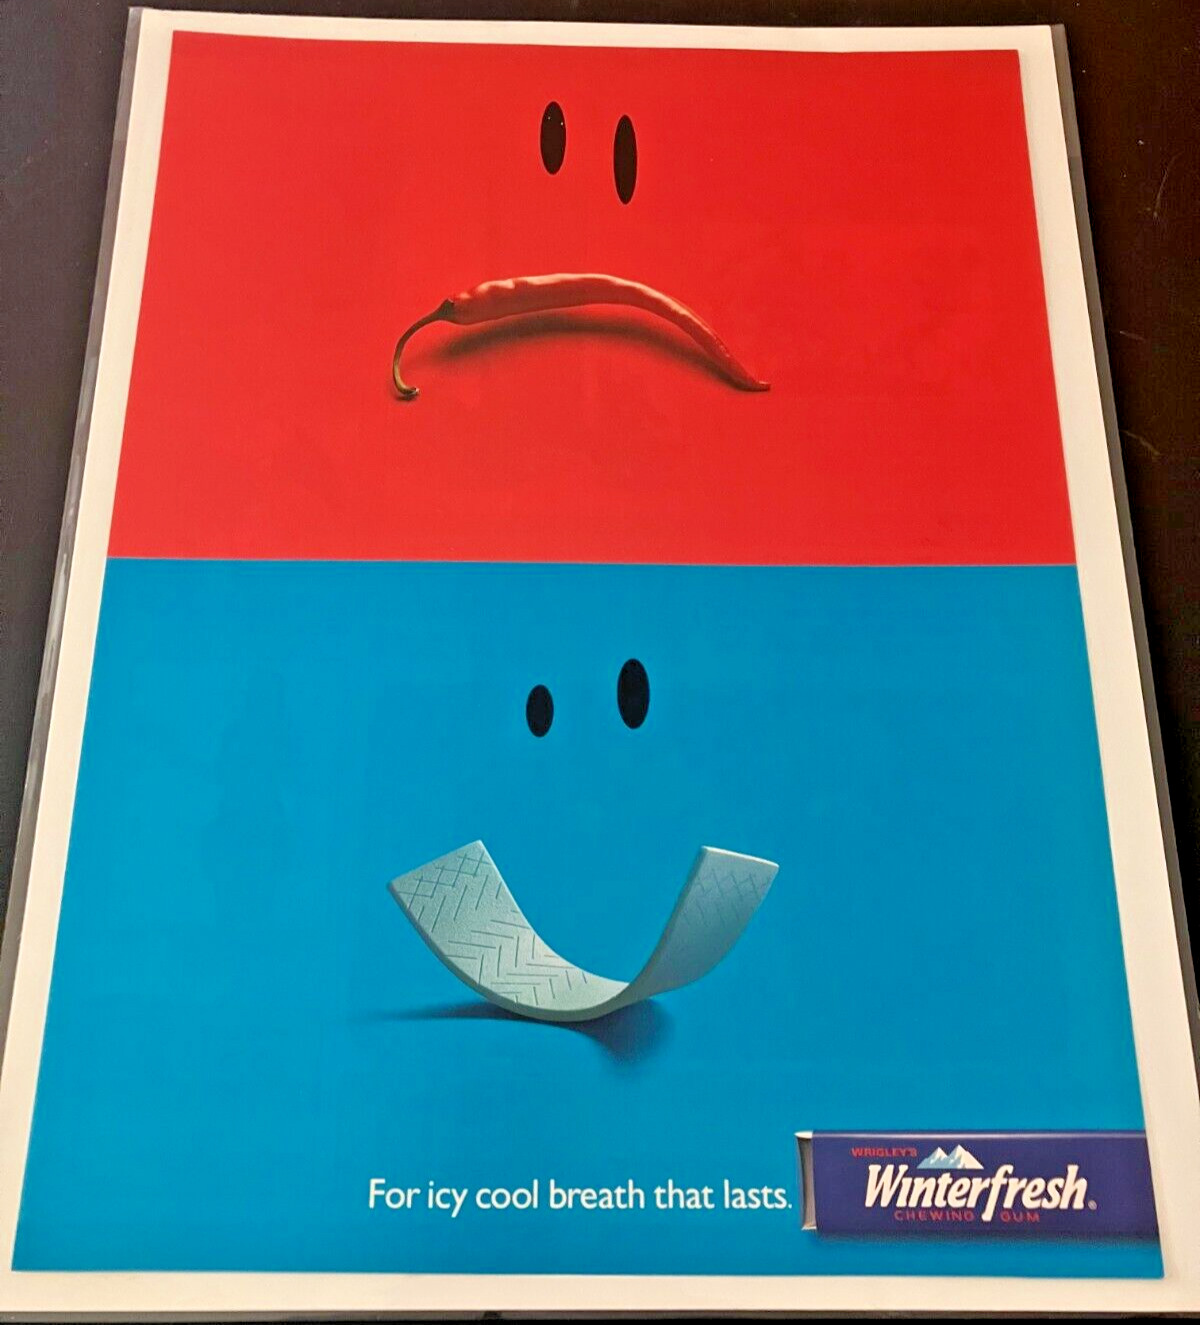 Winterfresh Gum - Vintage Original 1999 Print Ad / Poster / Wall Art - MINT